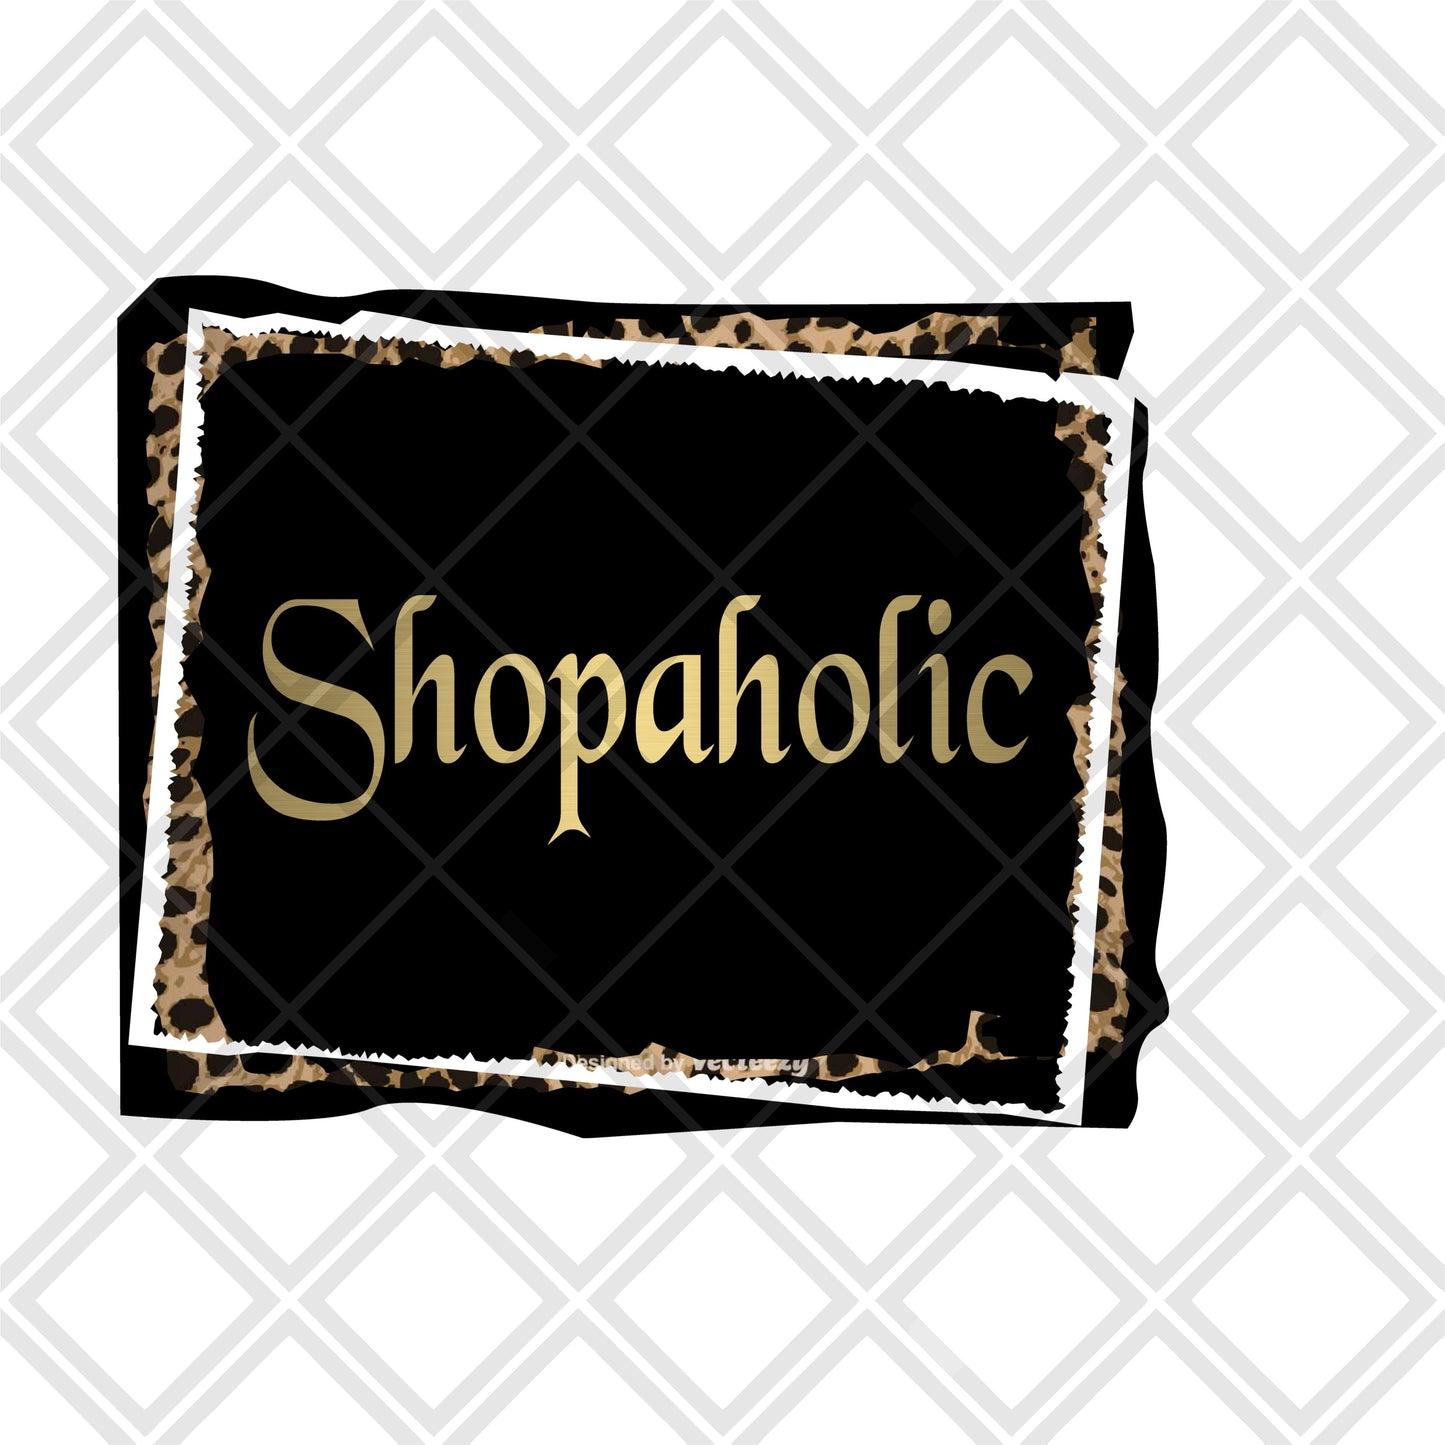 Shopaolic frame Digital Download Instand Download